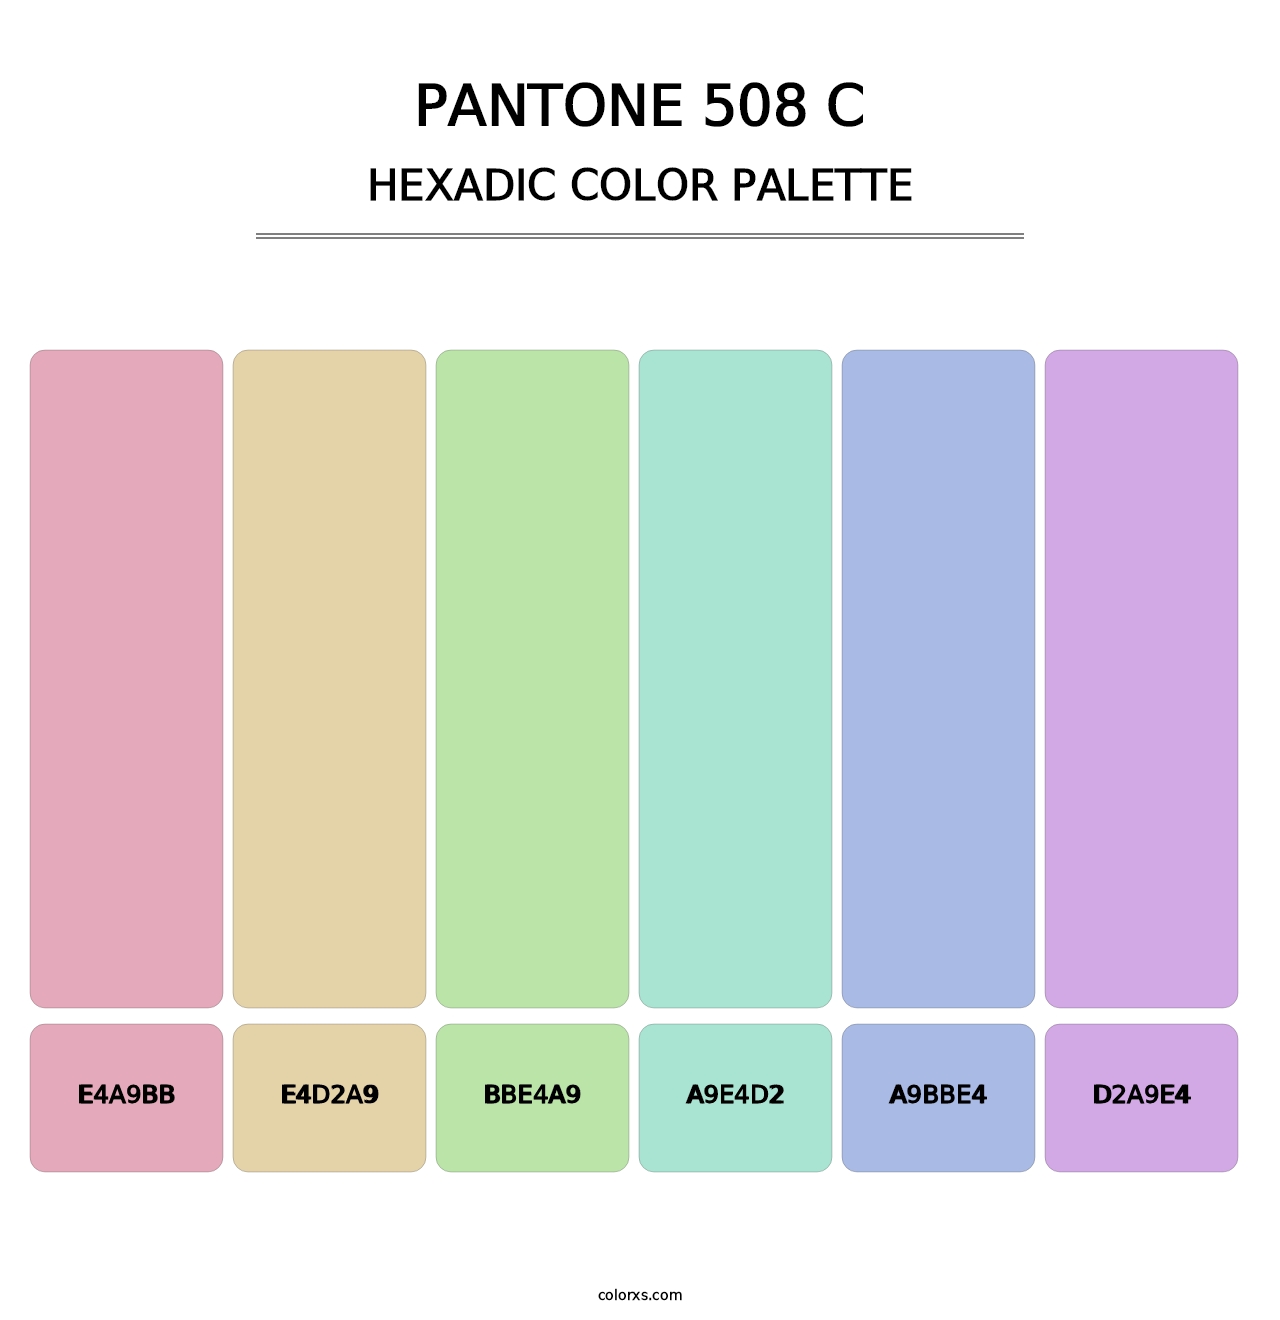 PANTONE 508 C - Hexadic Color Palette